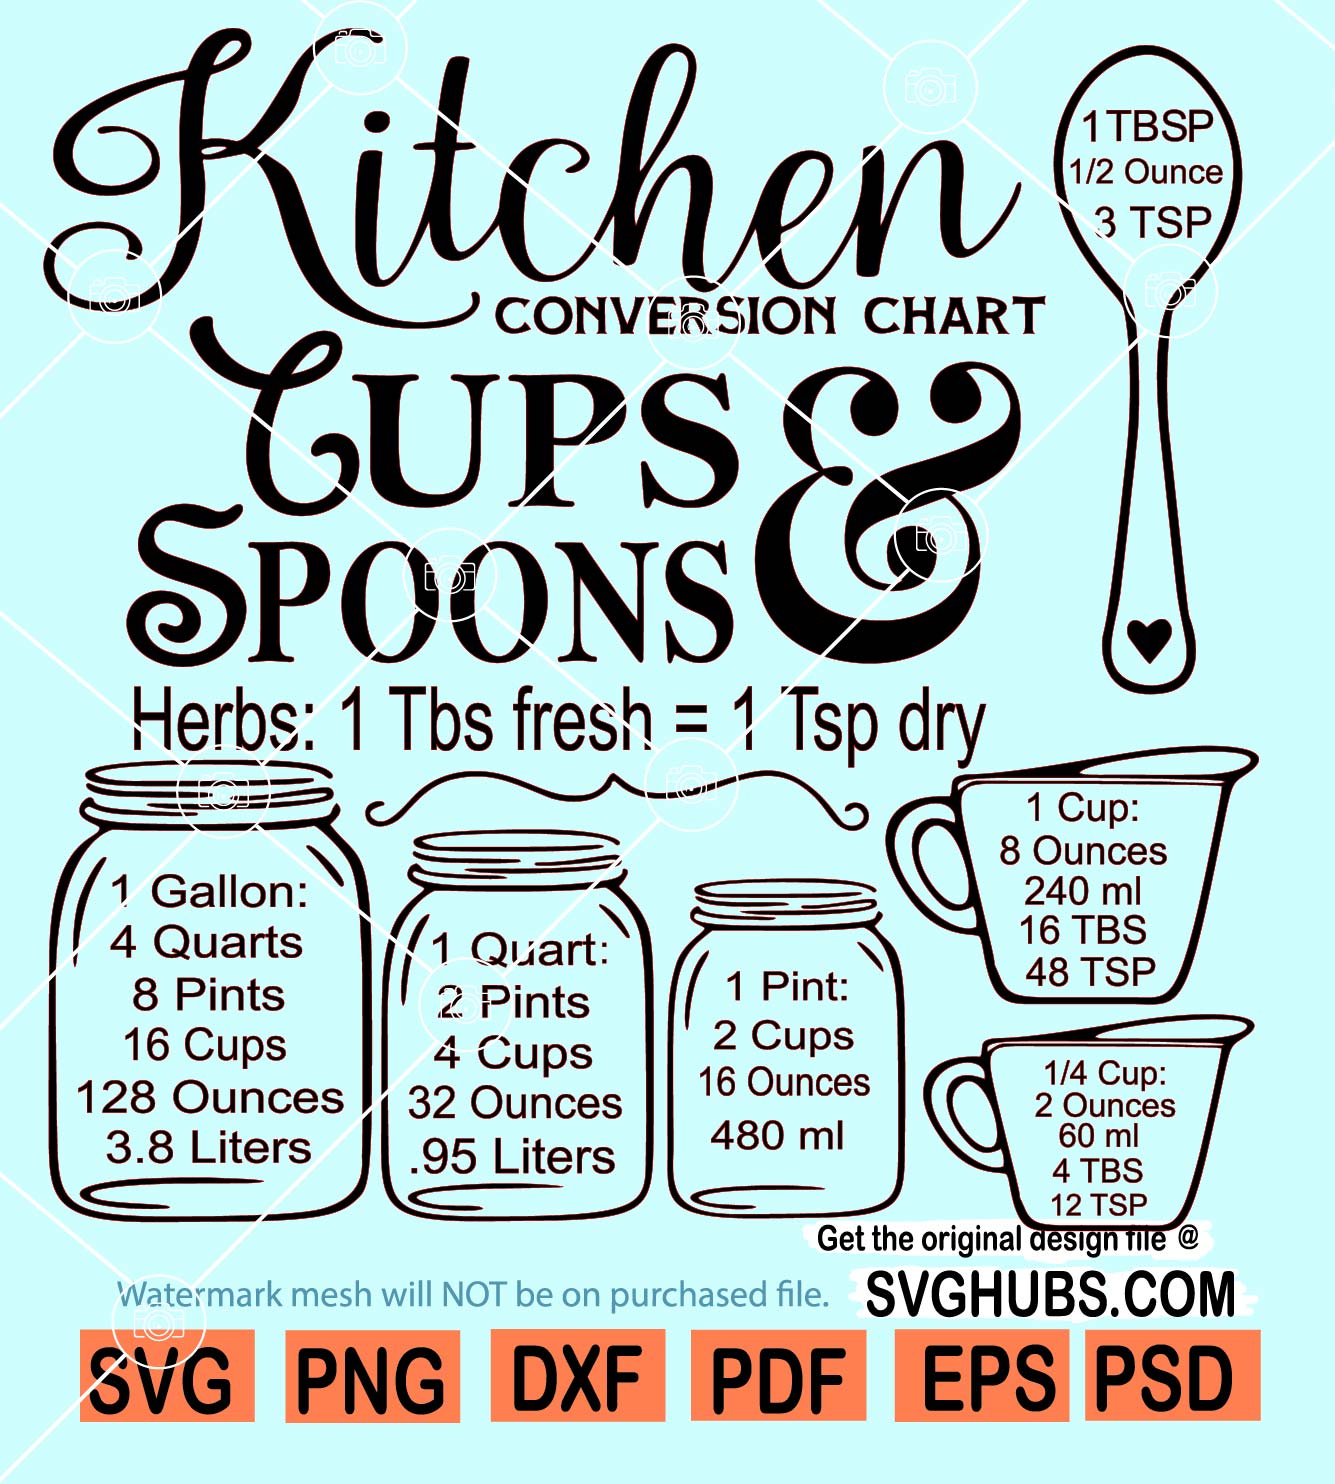 https://www.svghubs.com/wp-content/uploads/2021/10/Kitchen-conversion-chart-svg.jpg